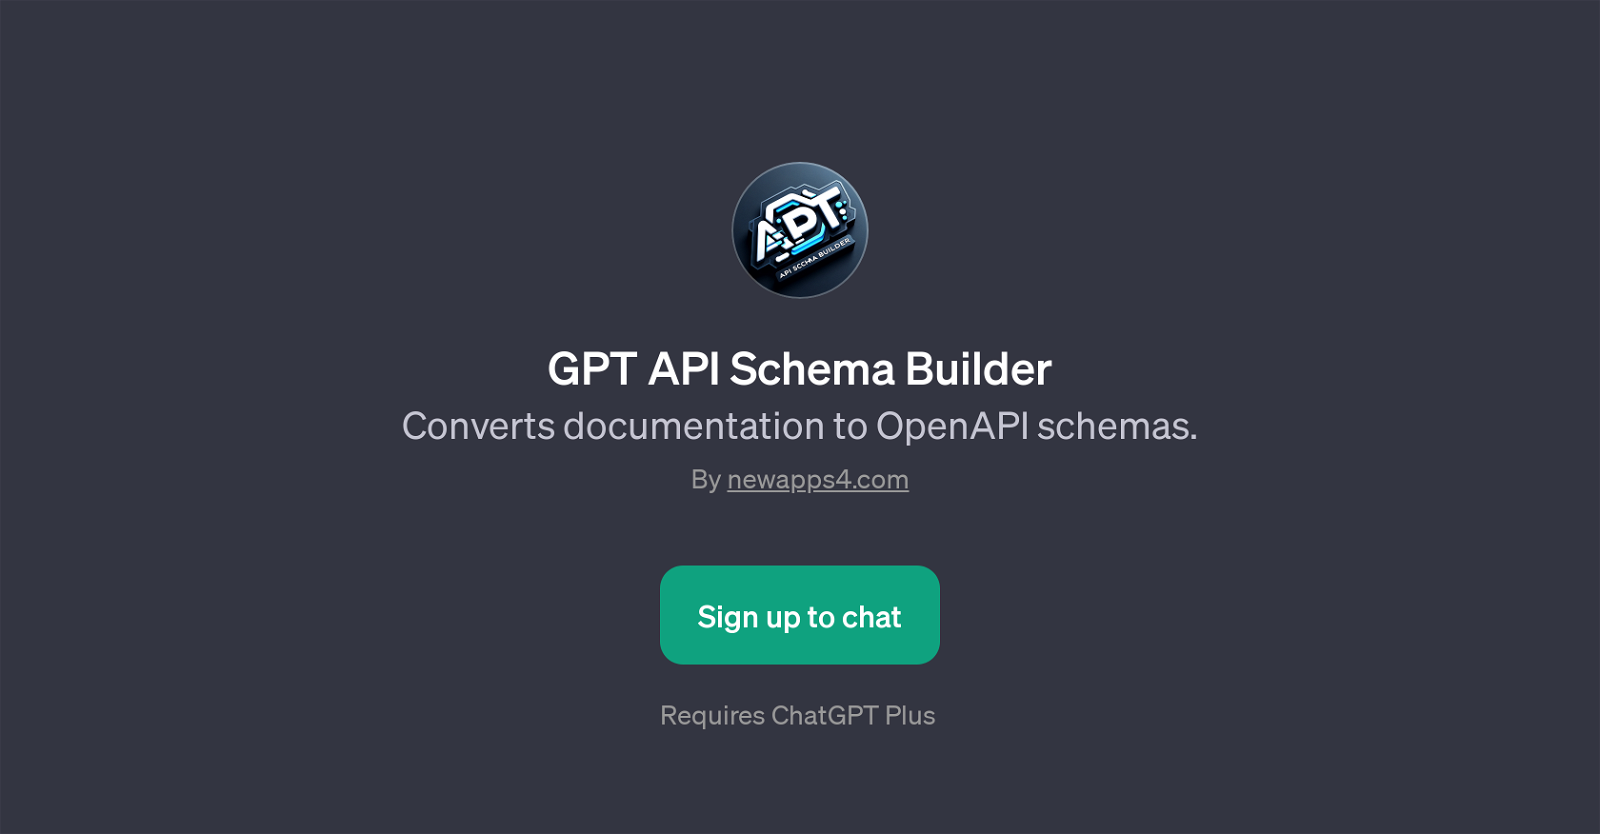 GPT API Schema Builder website